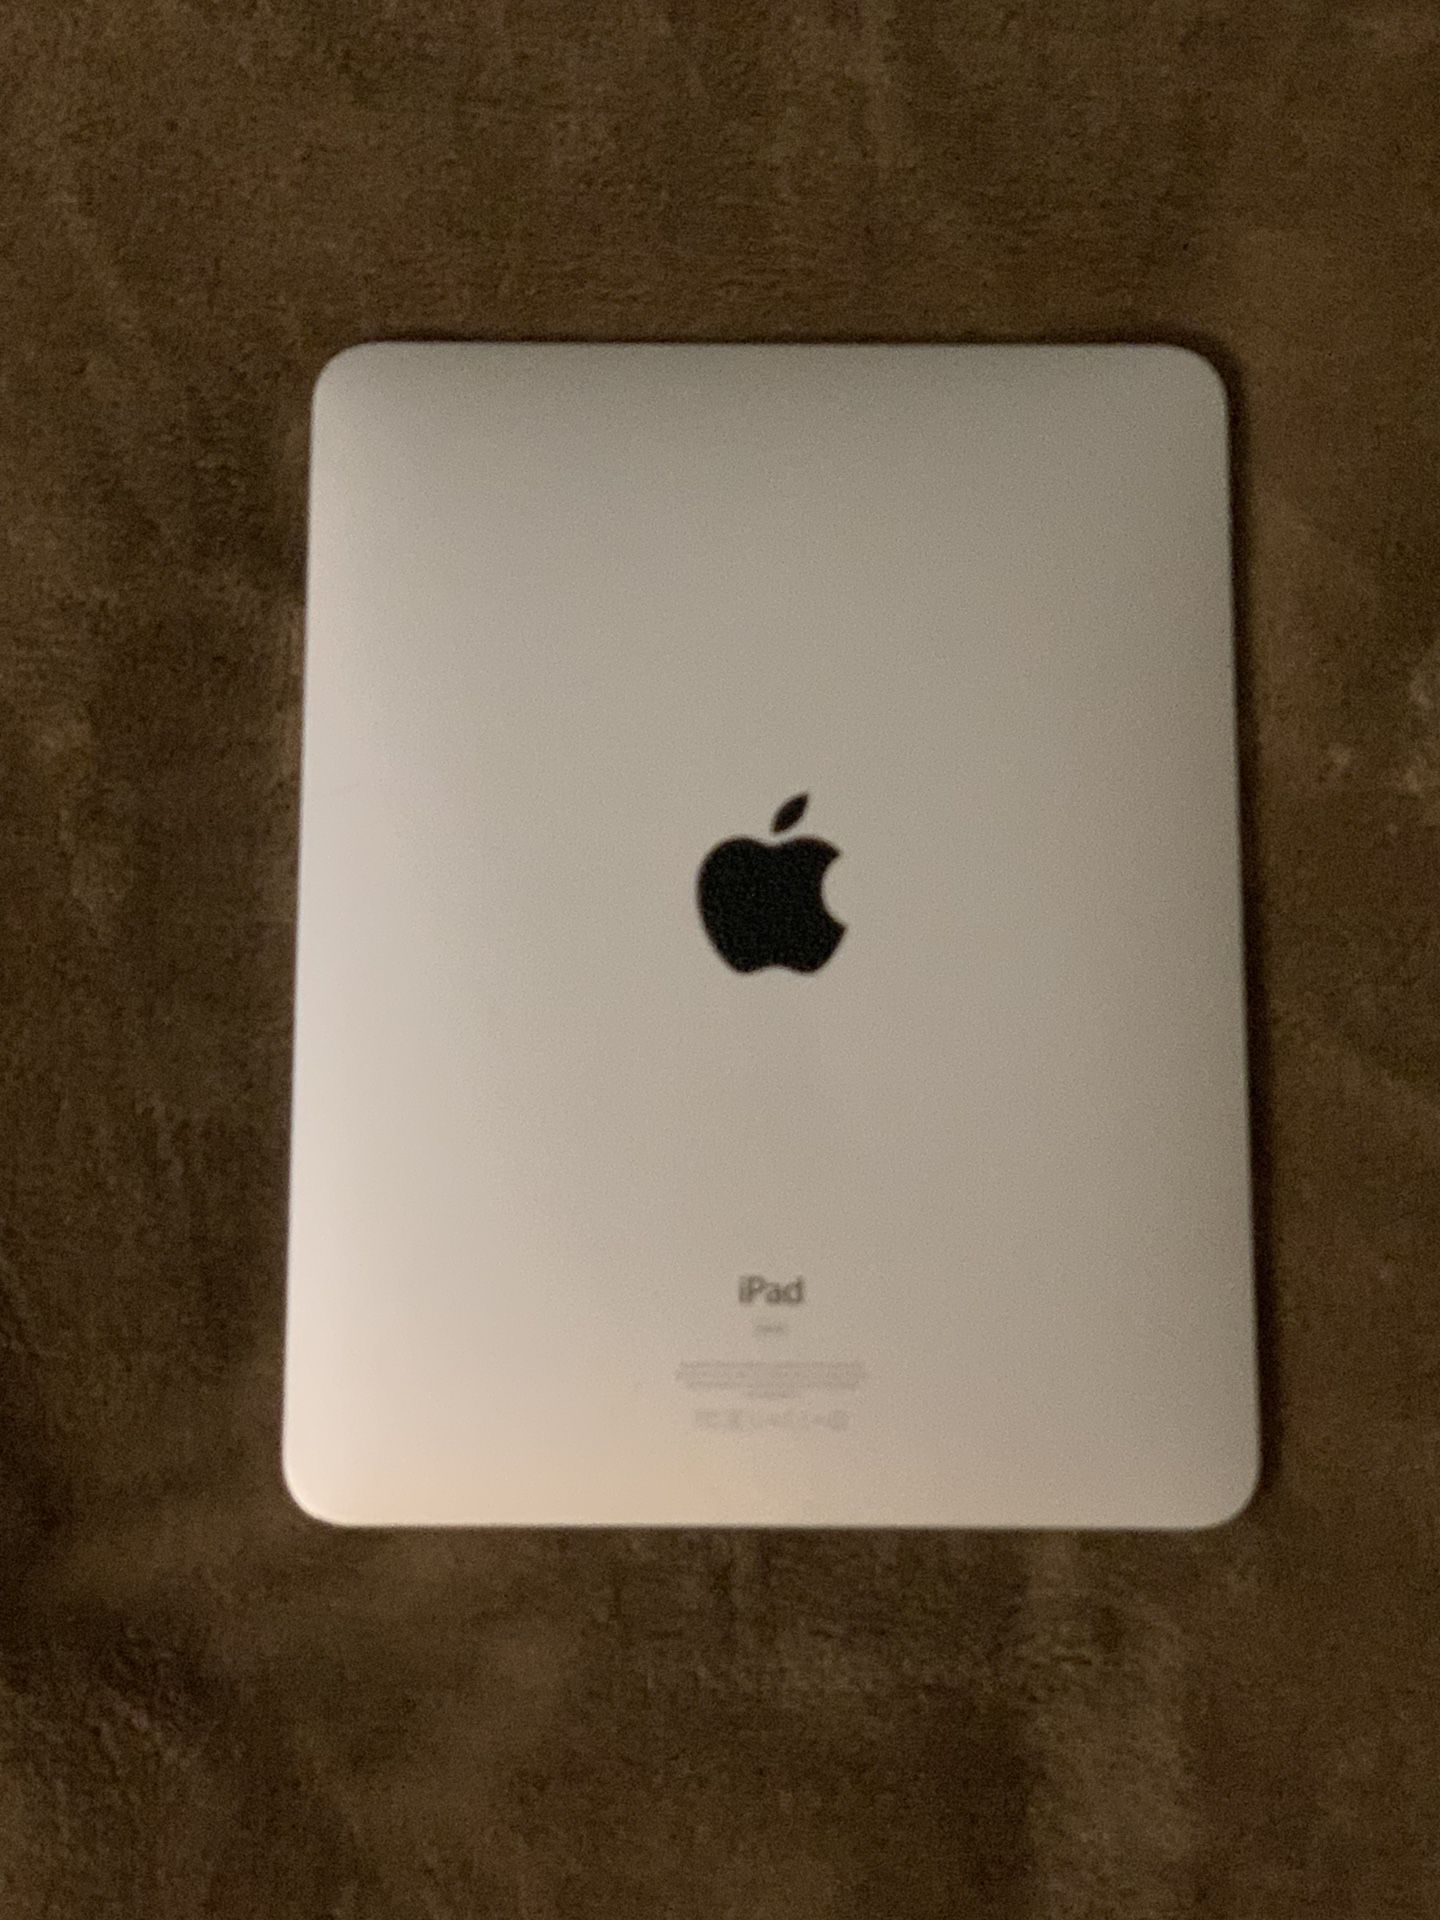 Apple iPad (1st Generation)